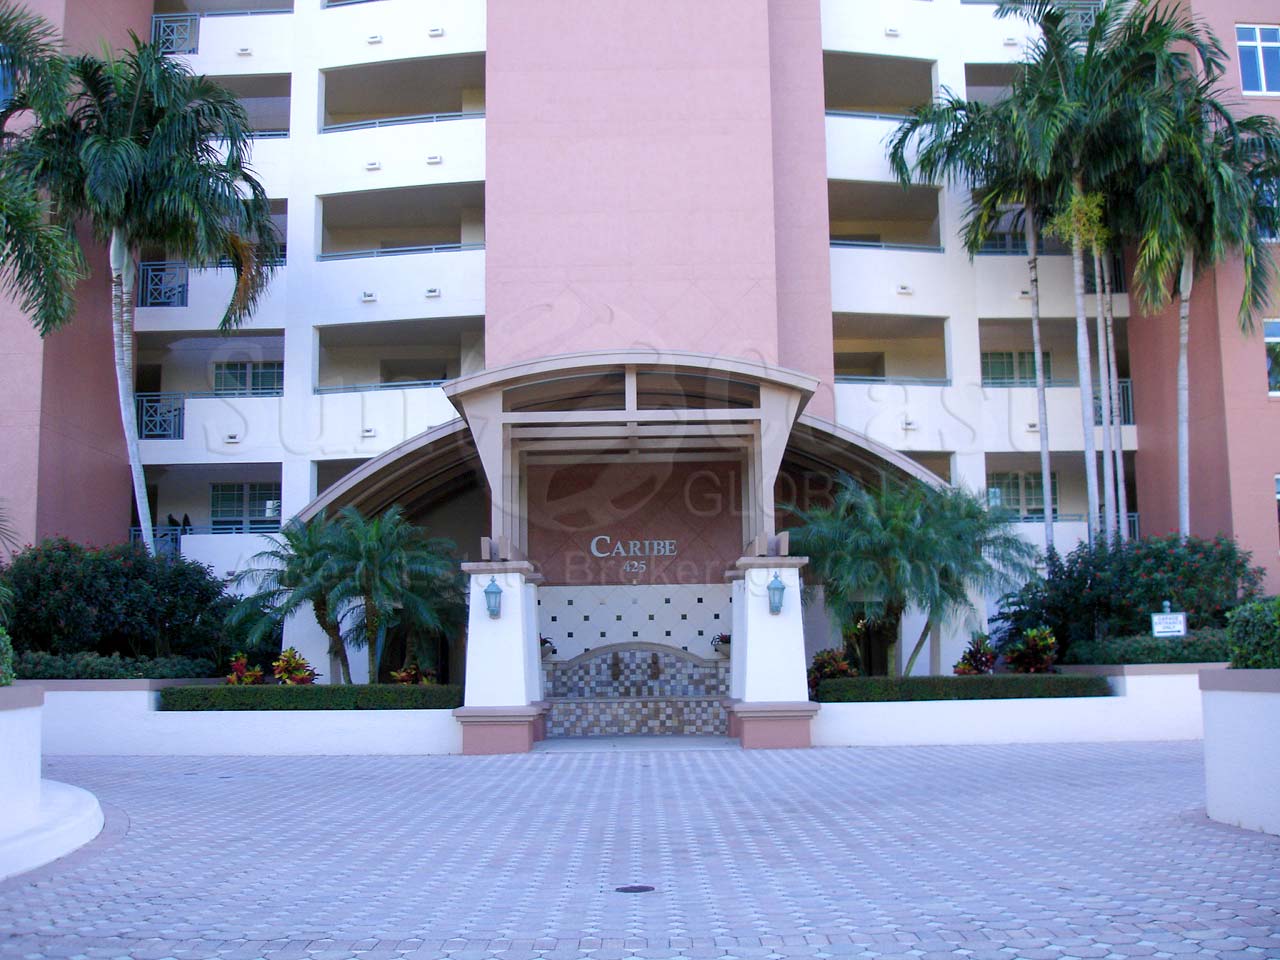 Caribe Entrance